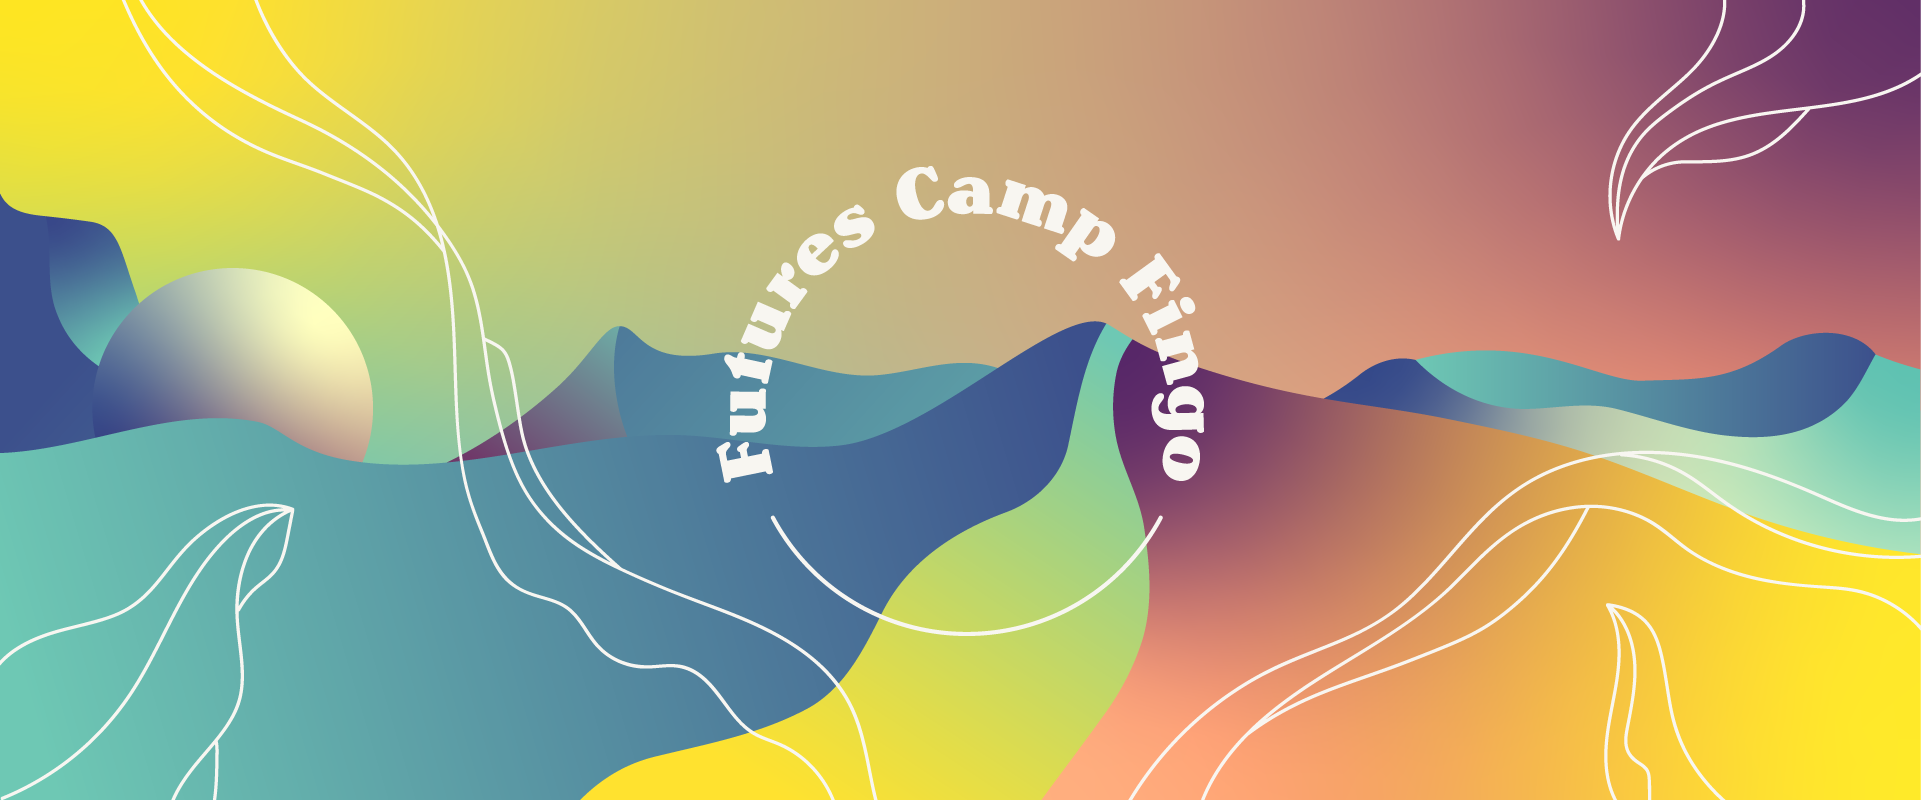 Futures Camp Fingo logo.